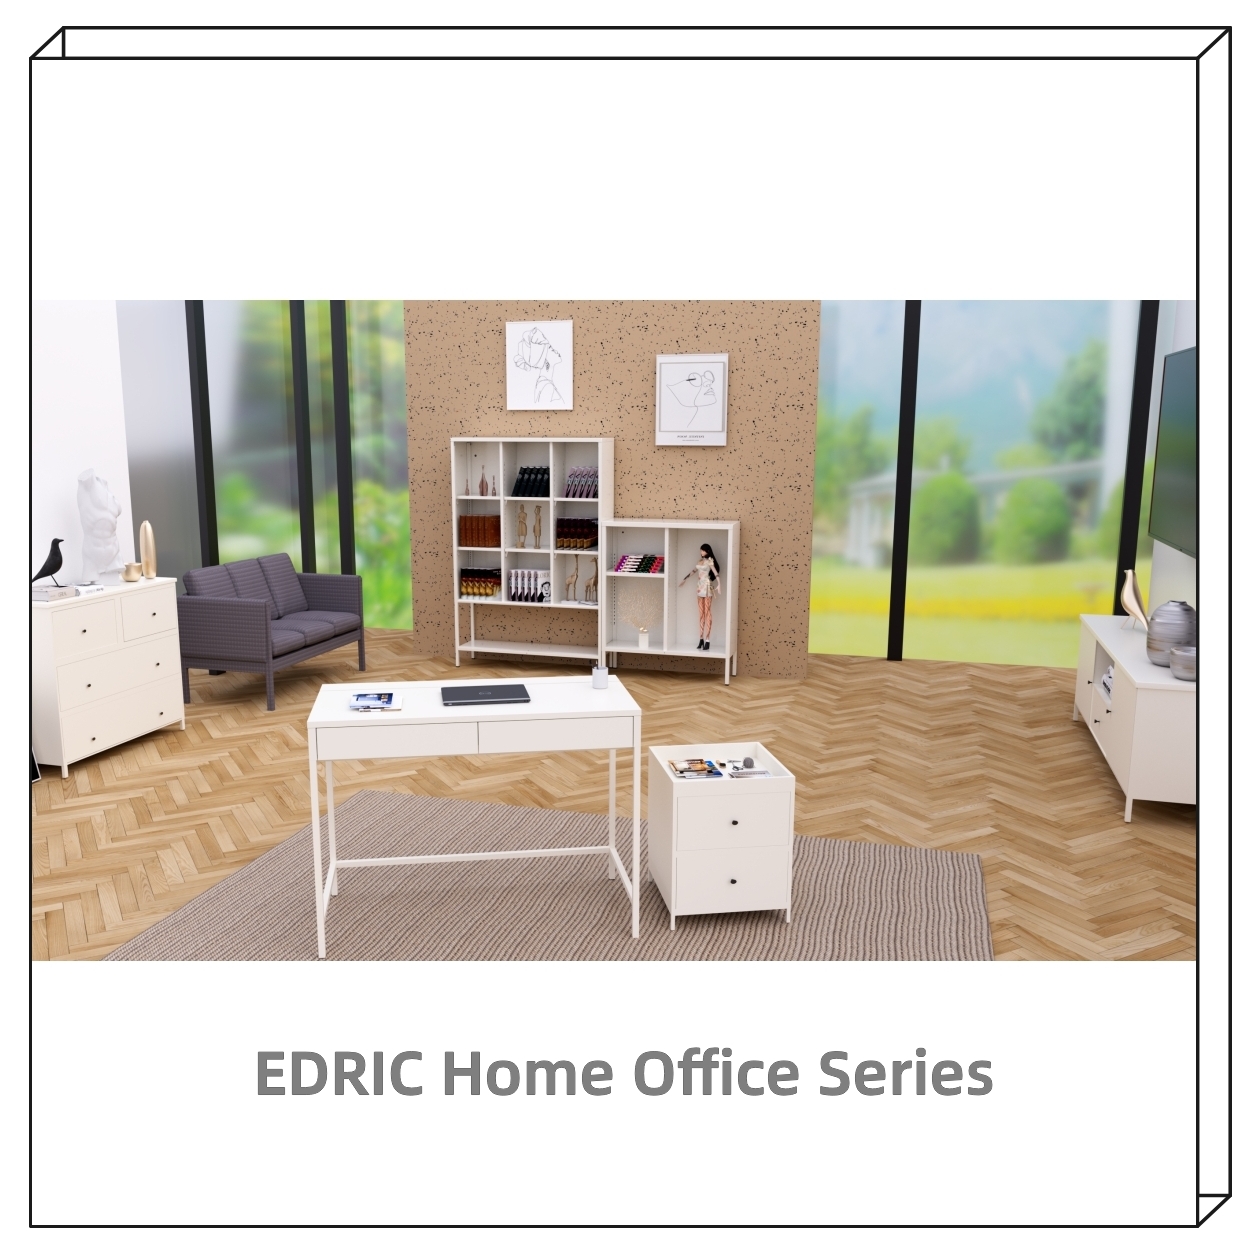 EDRIC Home Office Series